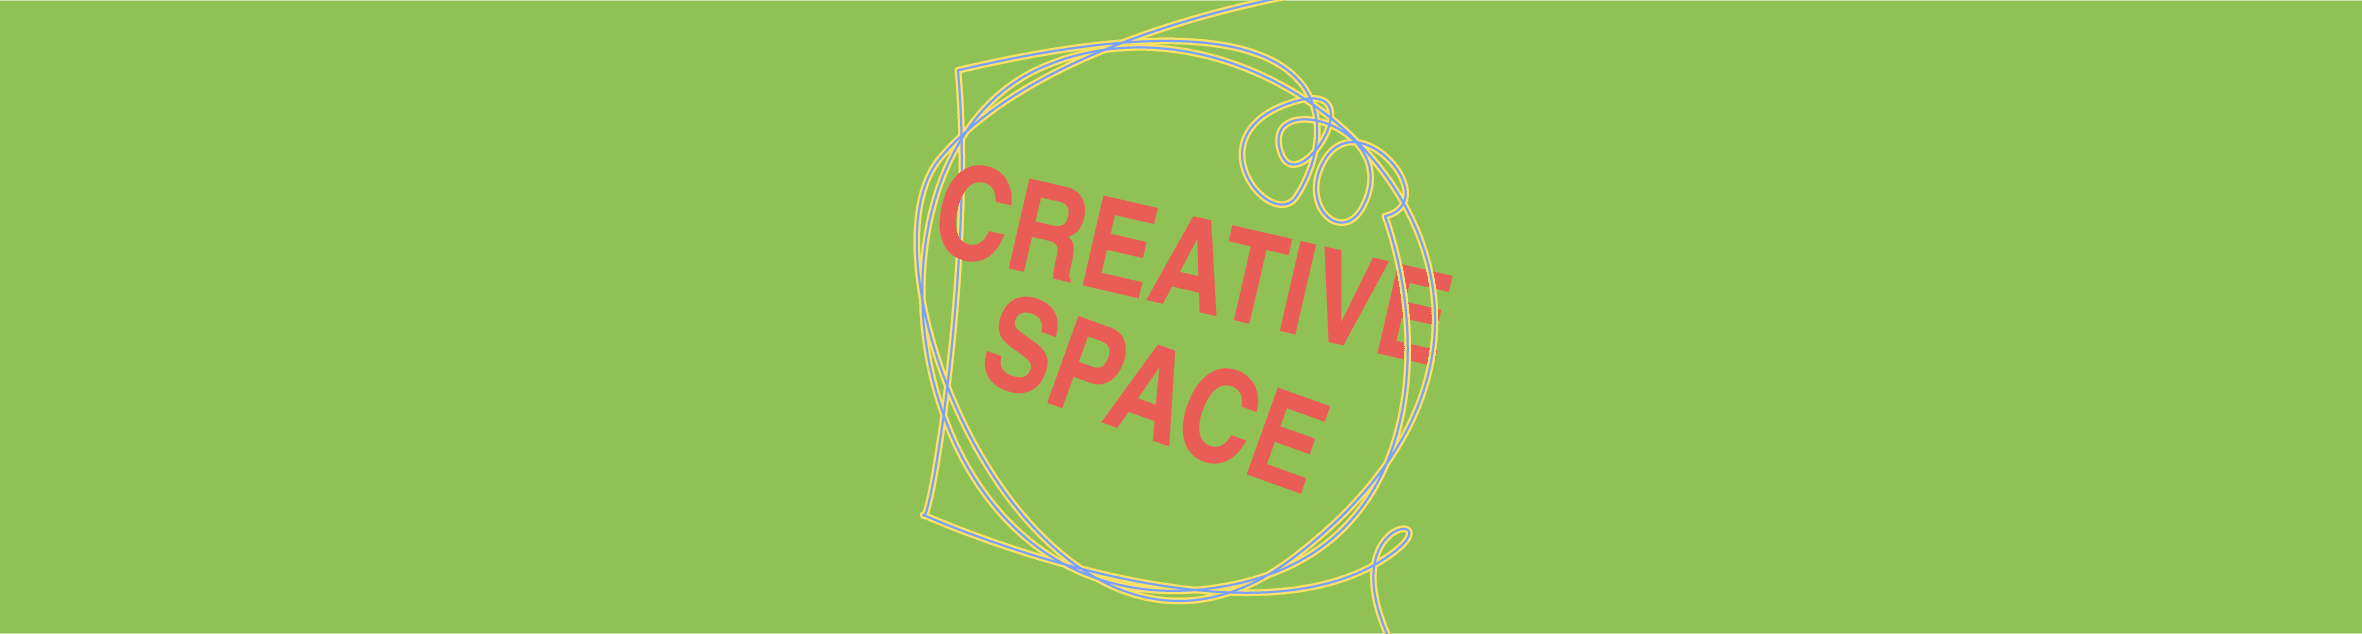 Creative Space